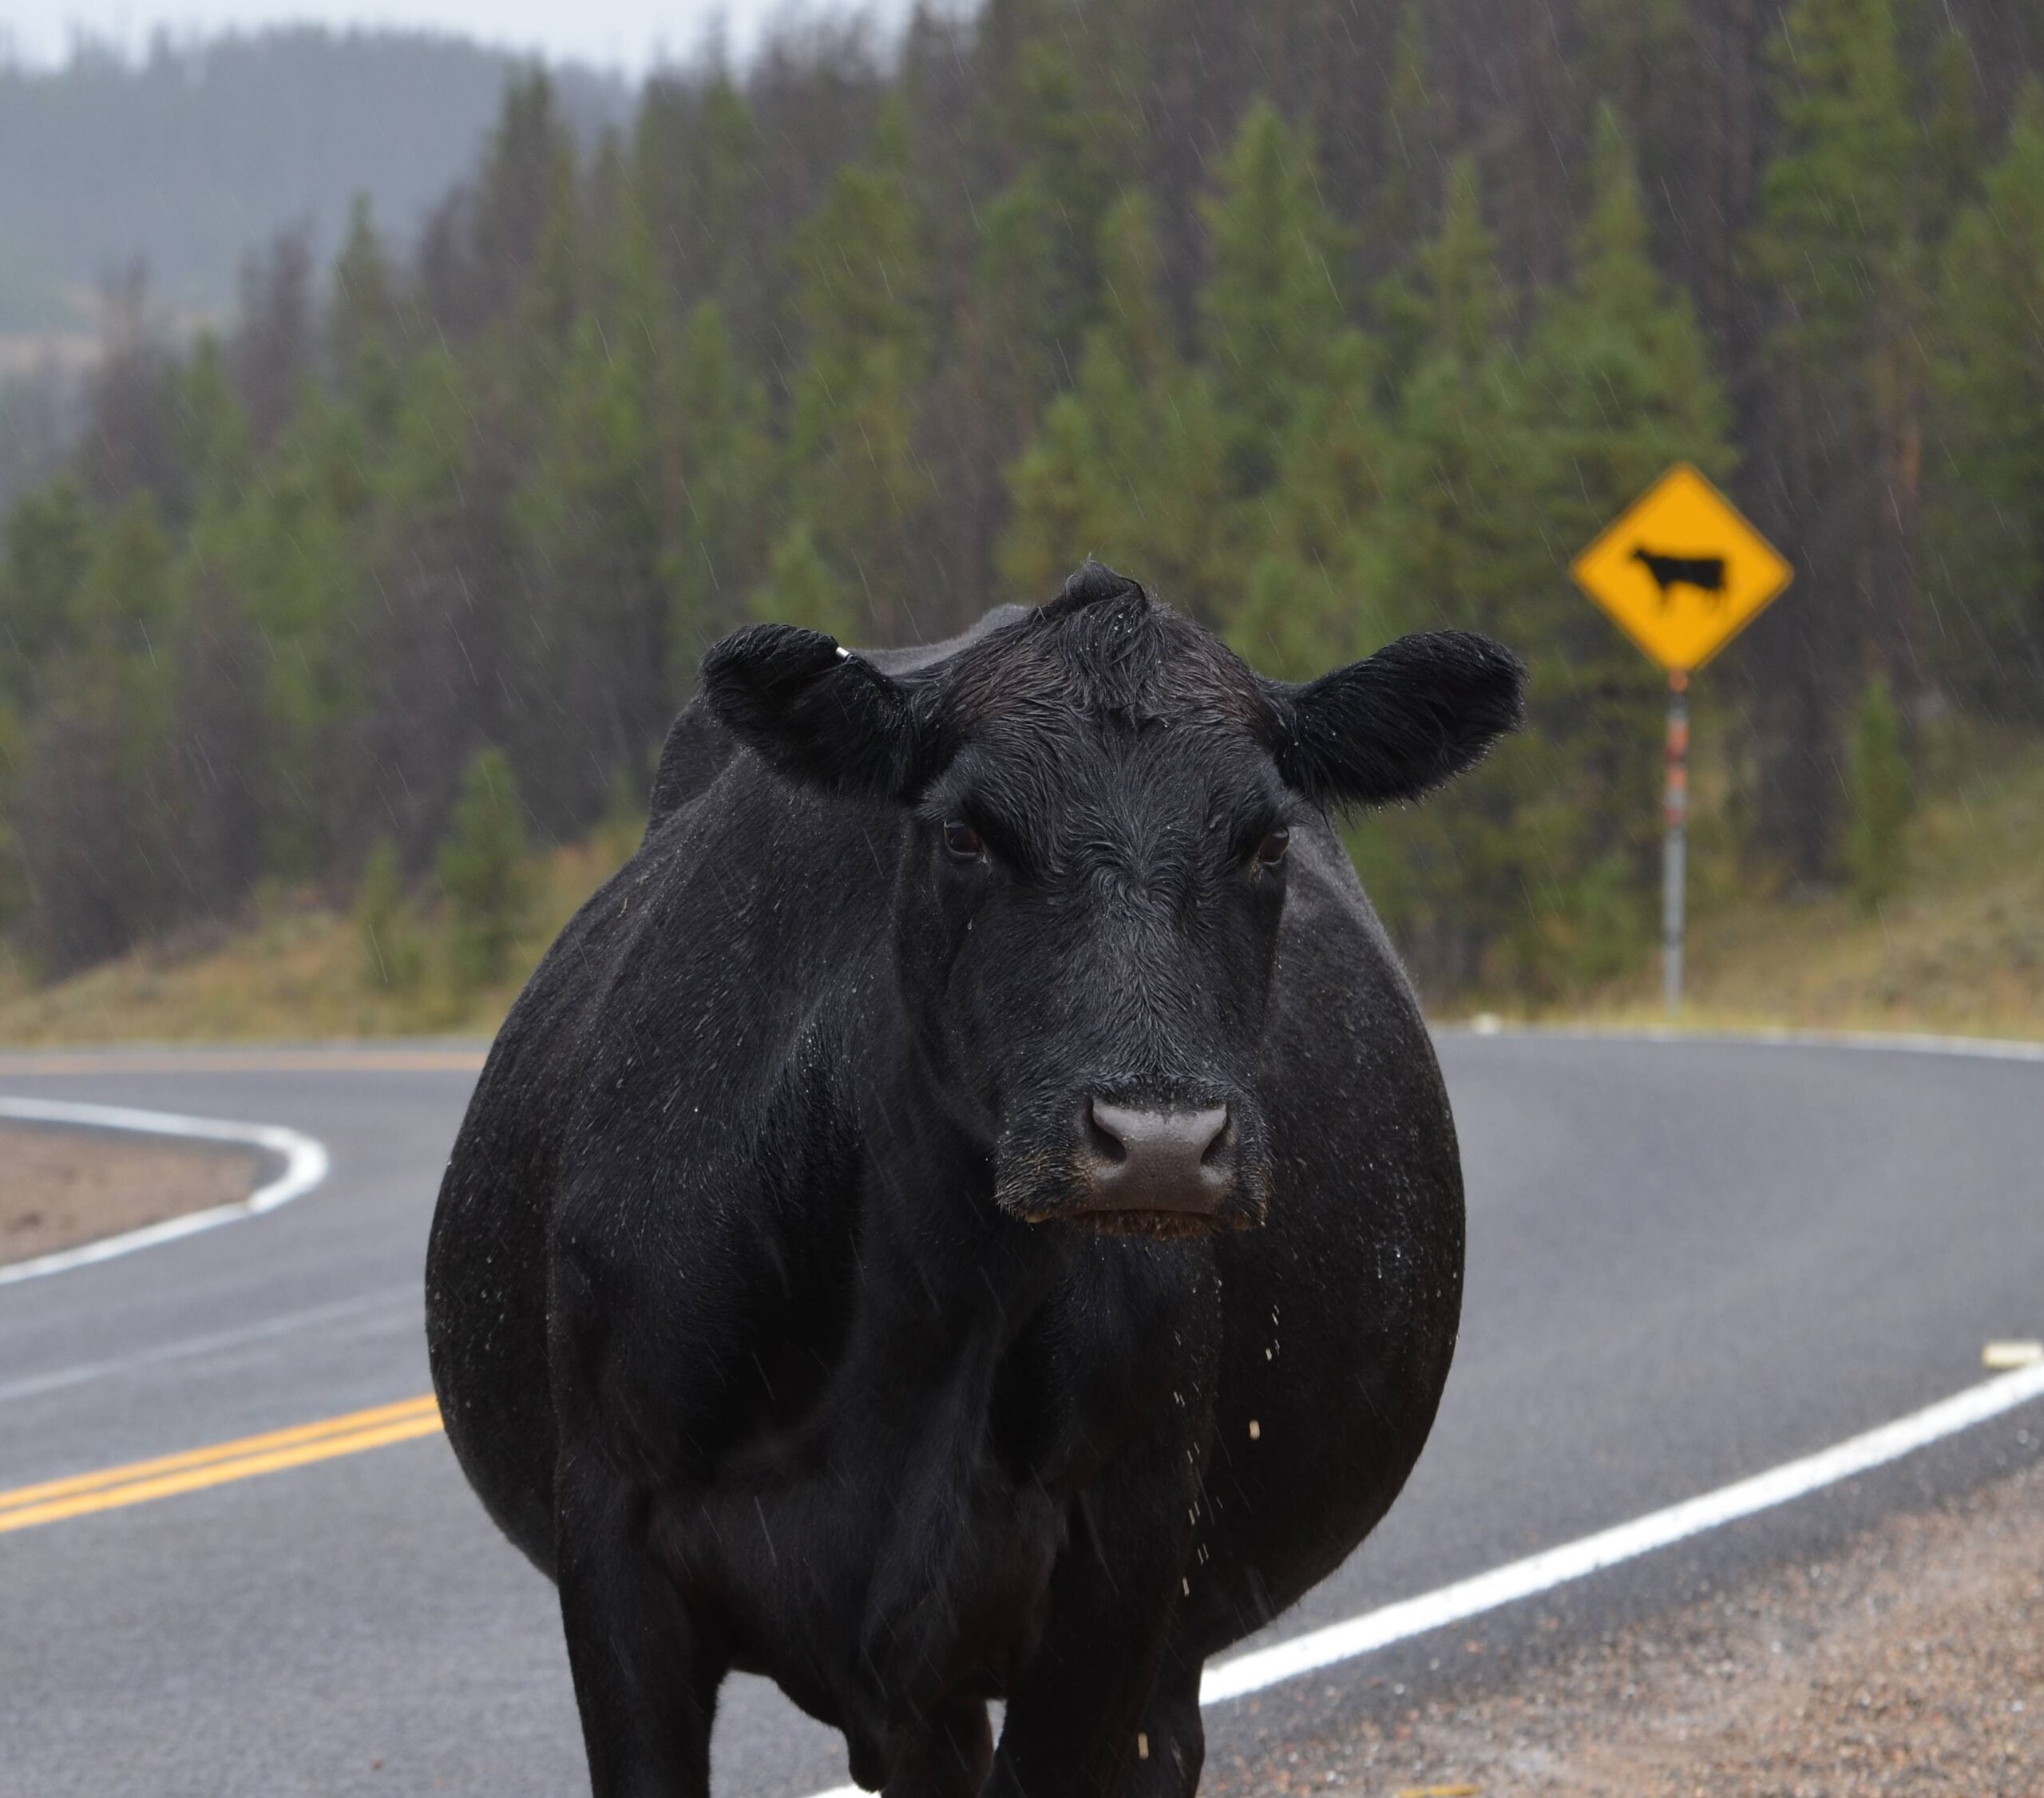 Free range steer stands along Colorado roadway.